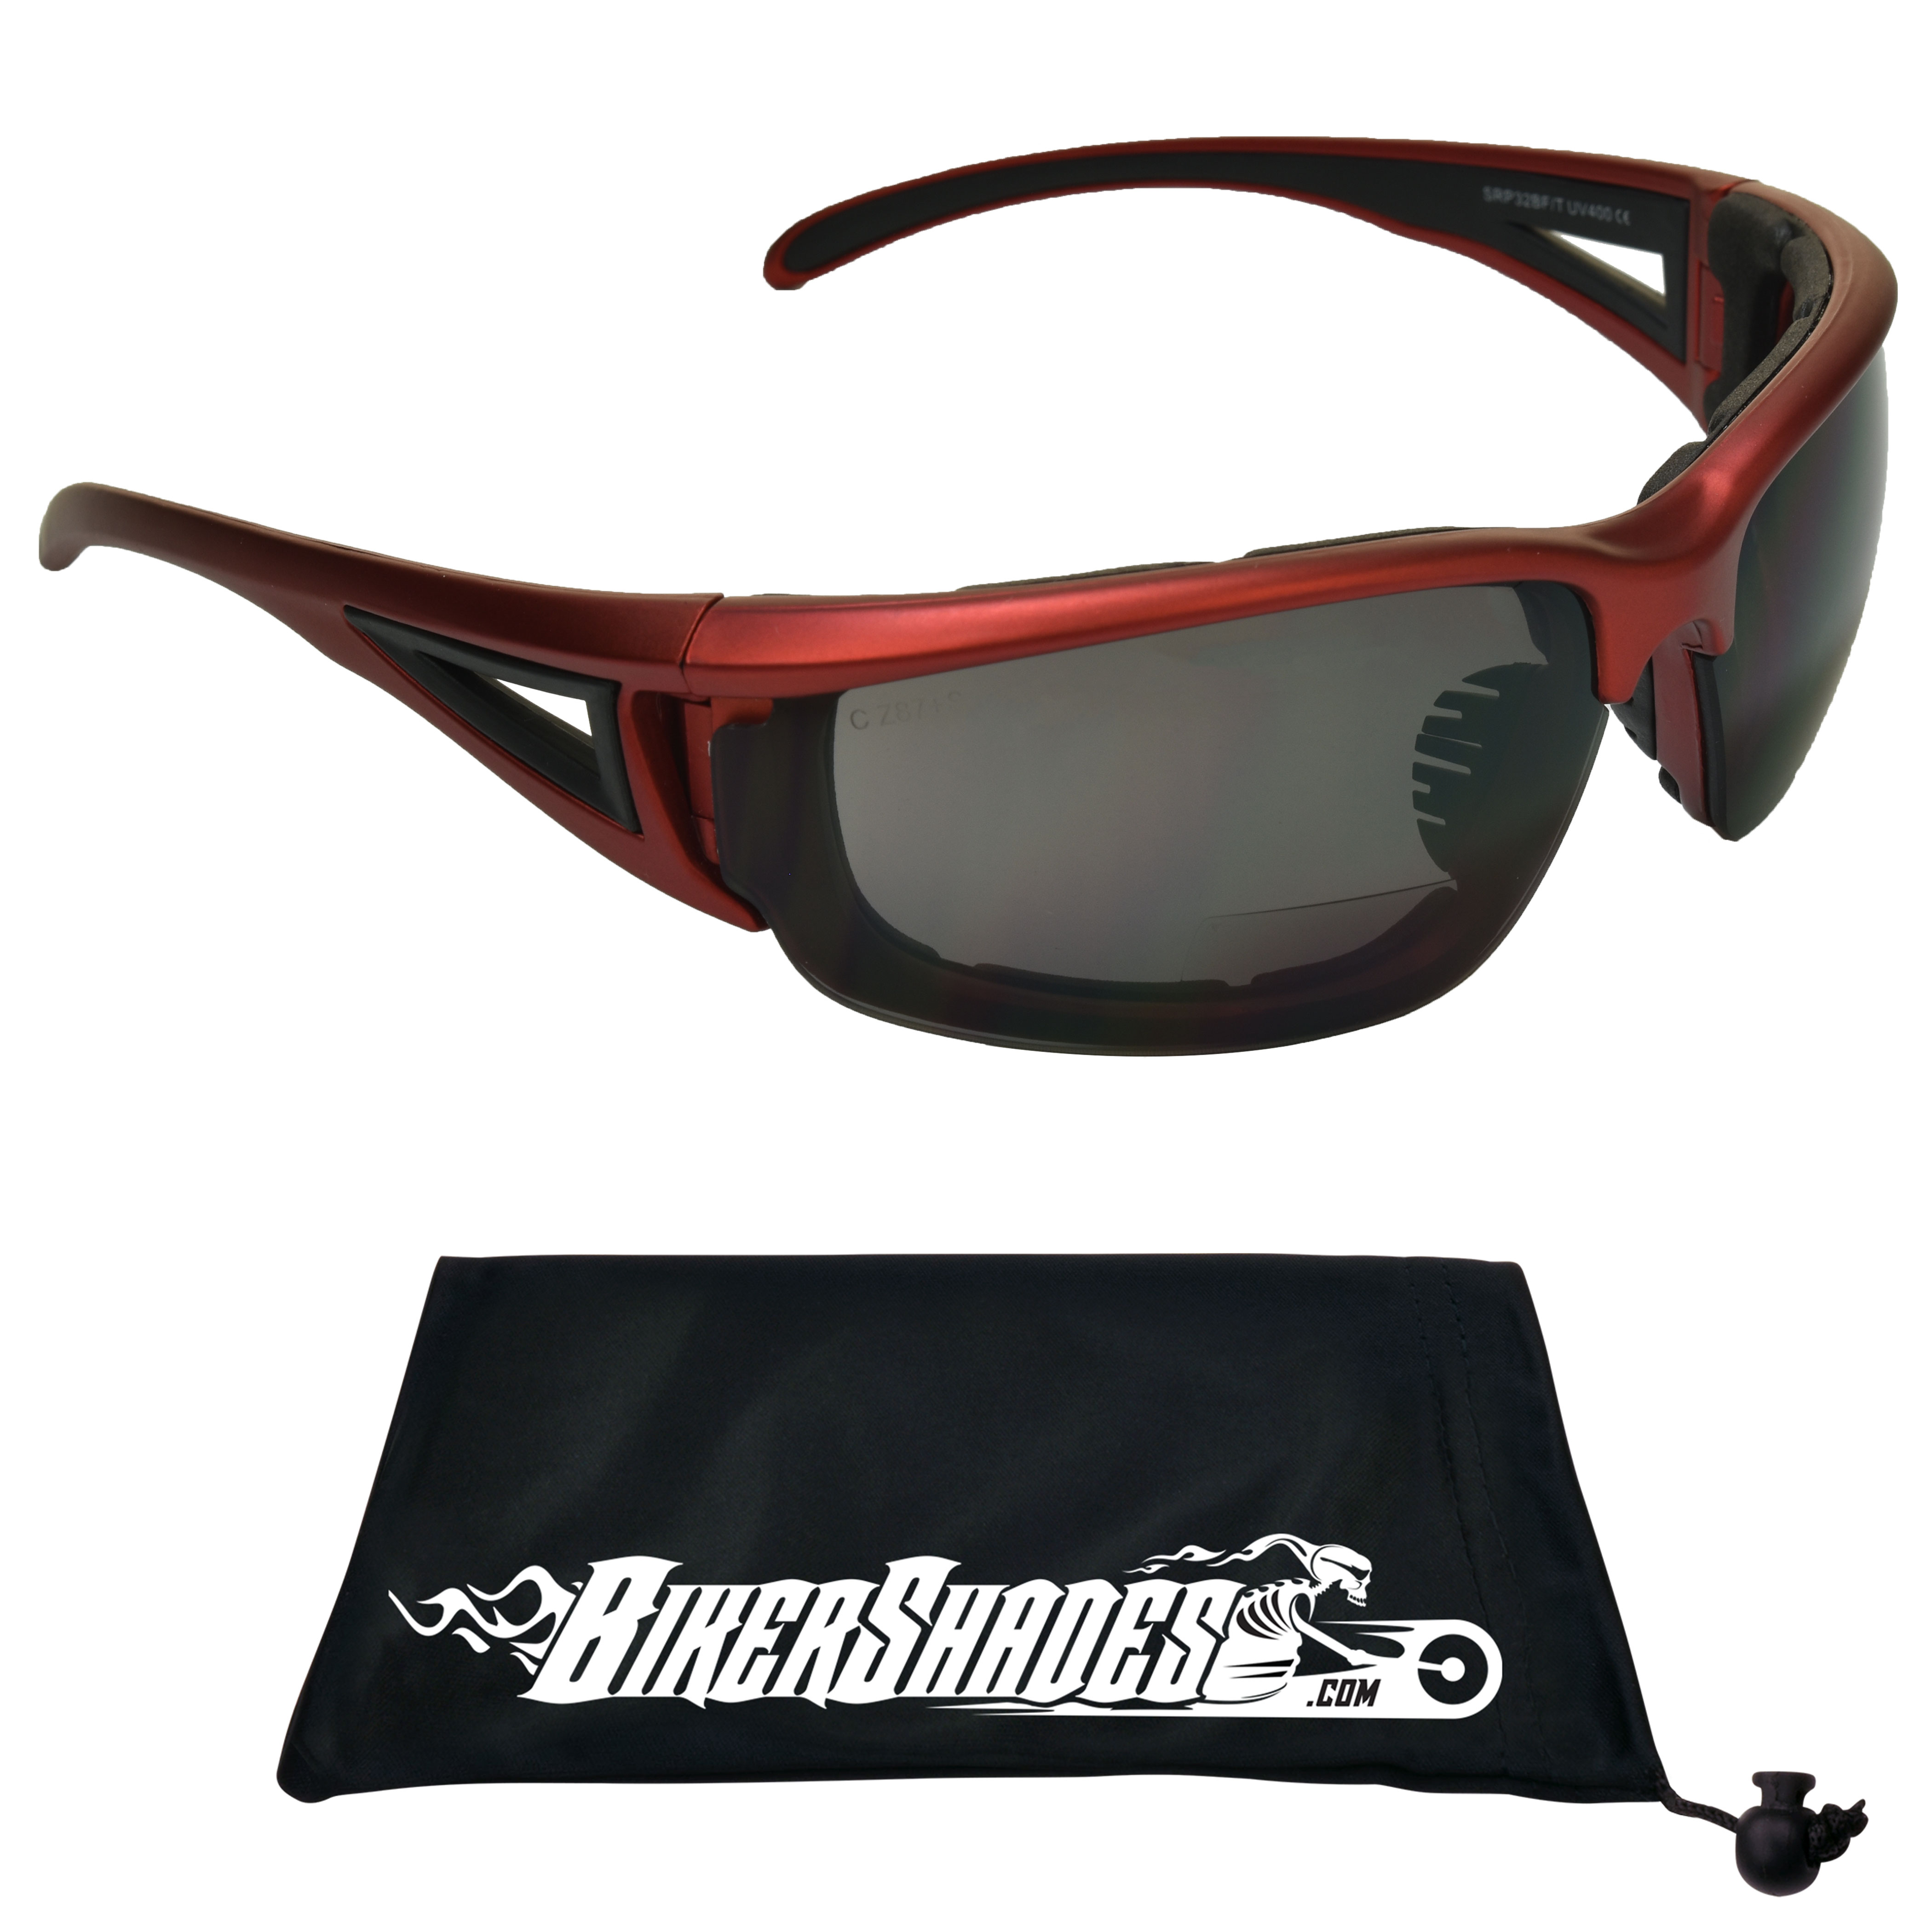 BIkershades Bifocal Safety Motorcycle Riding Foam Padded Sunglasses - image 1 of 6